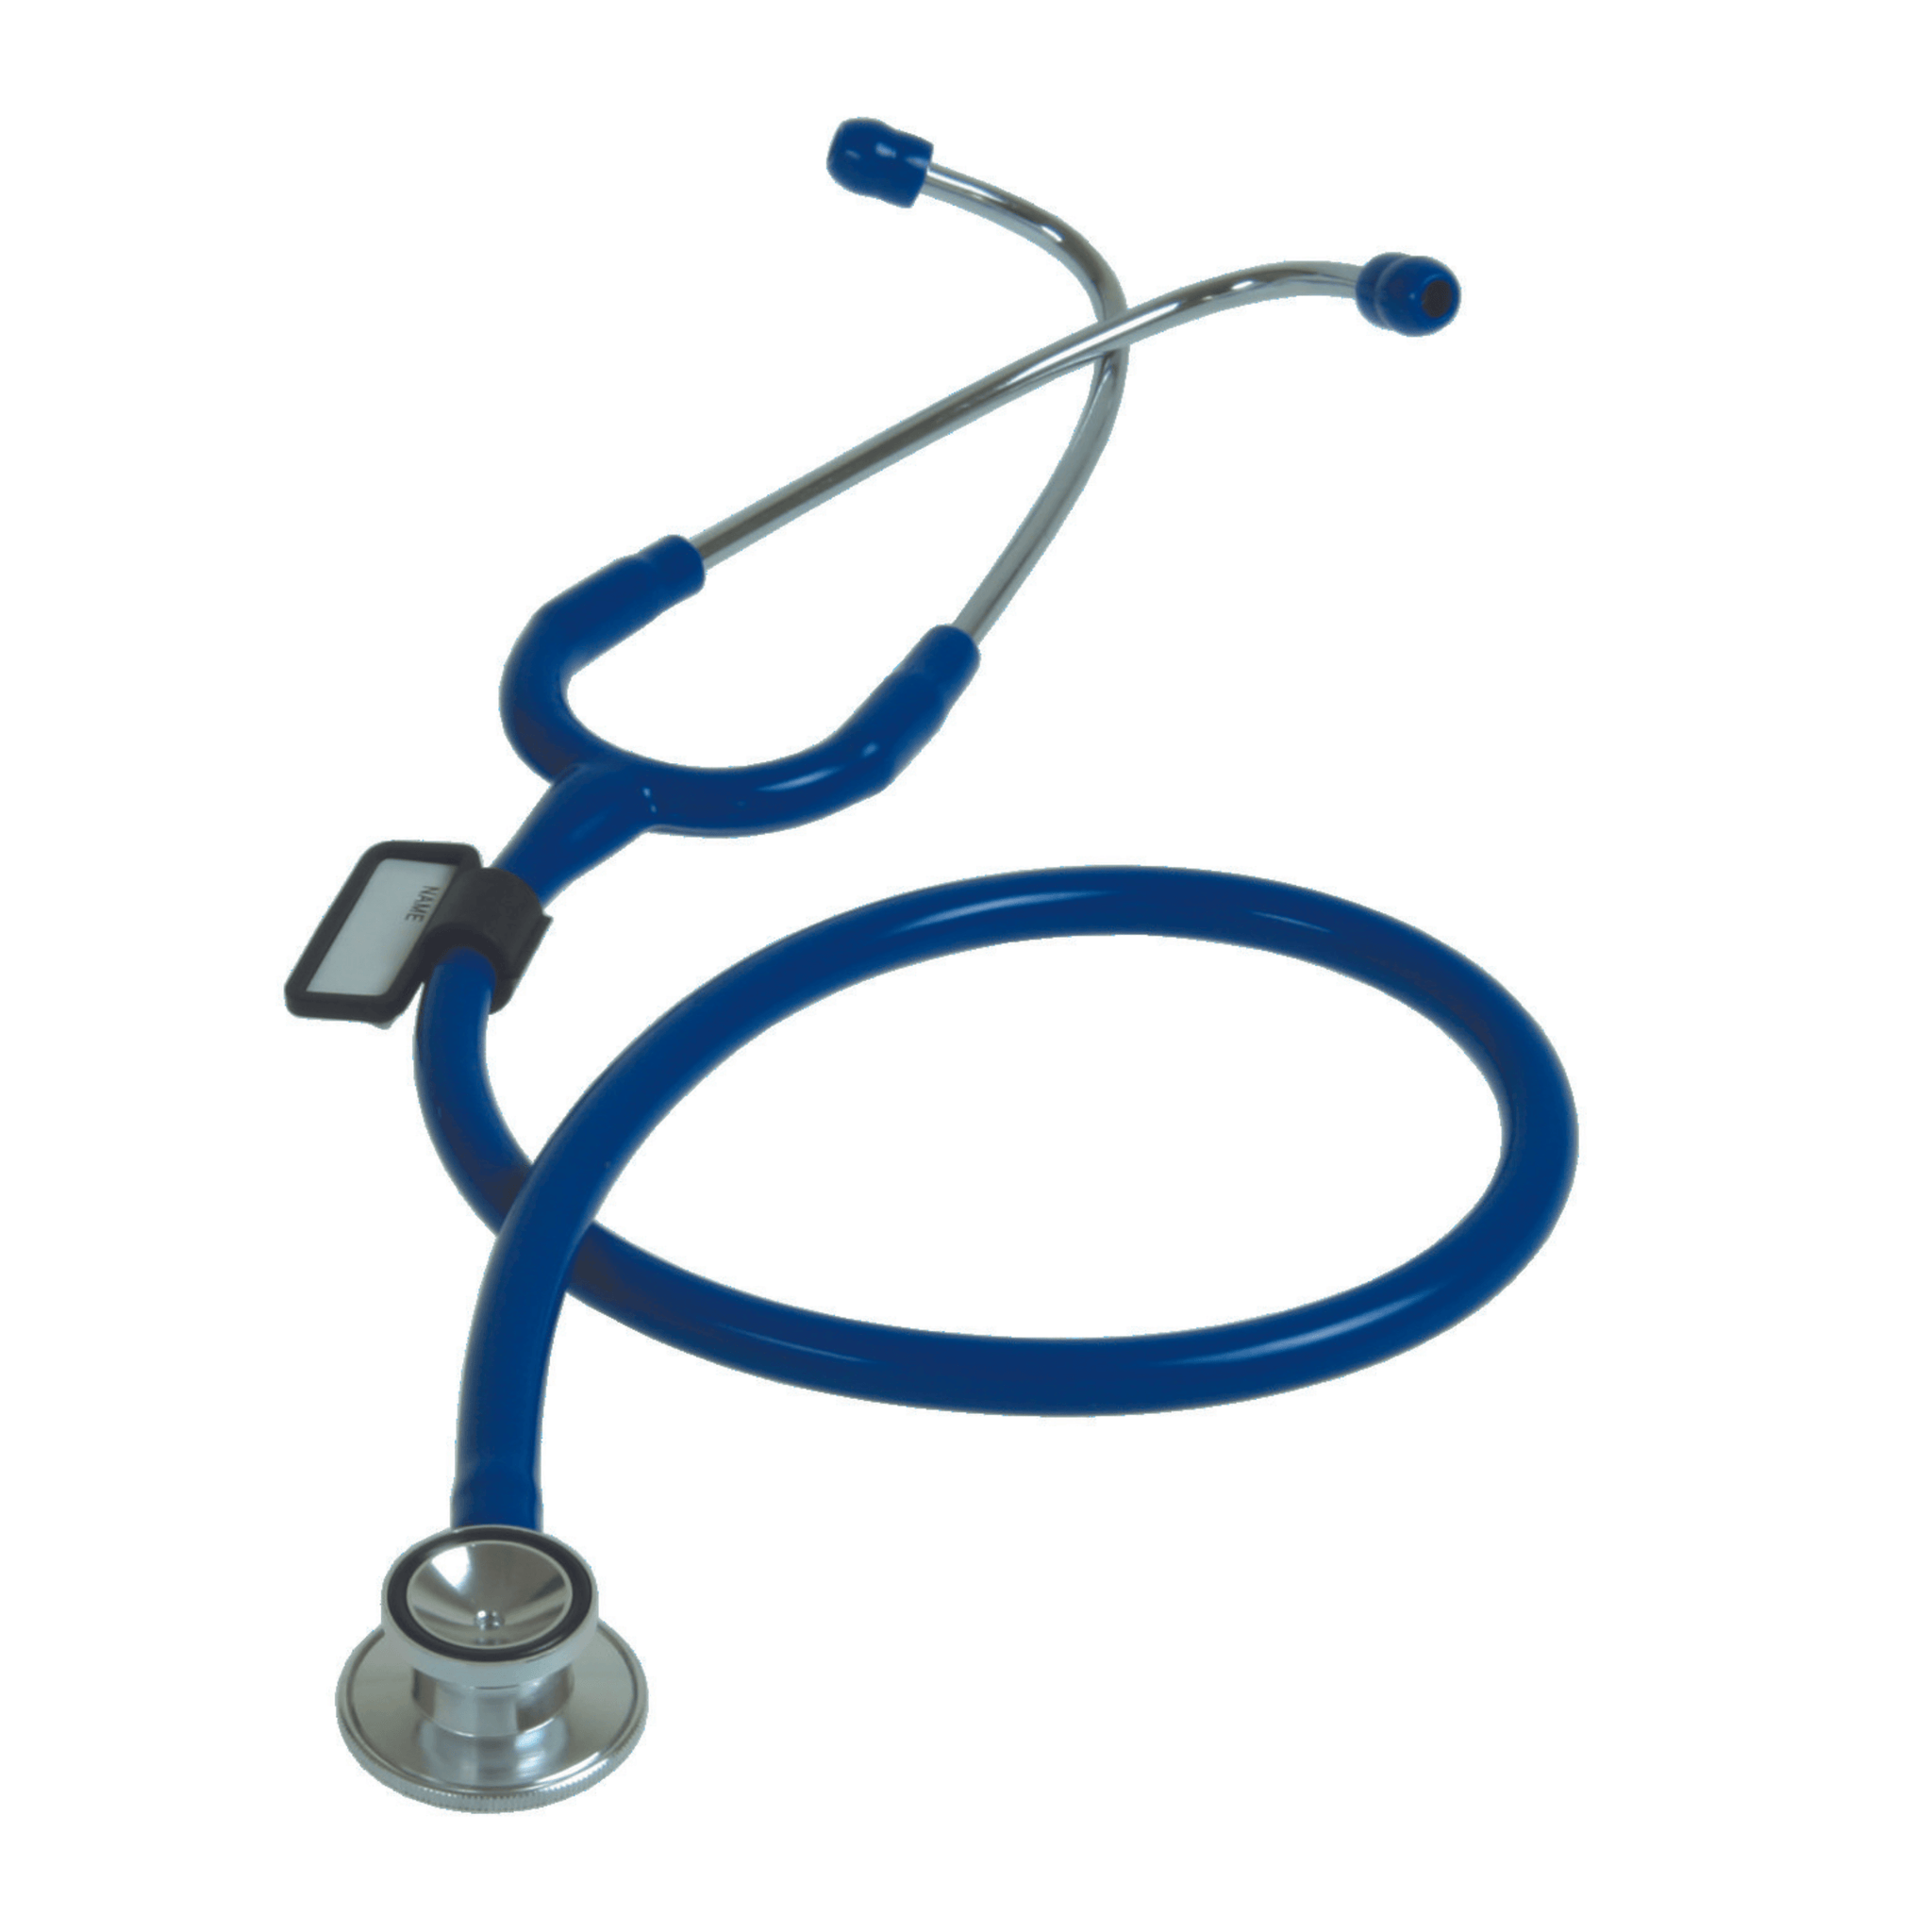 Dual Head Stethoscope - Pediatric, Royal Blue